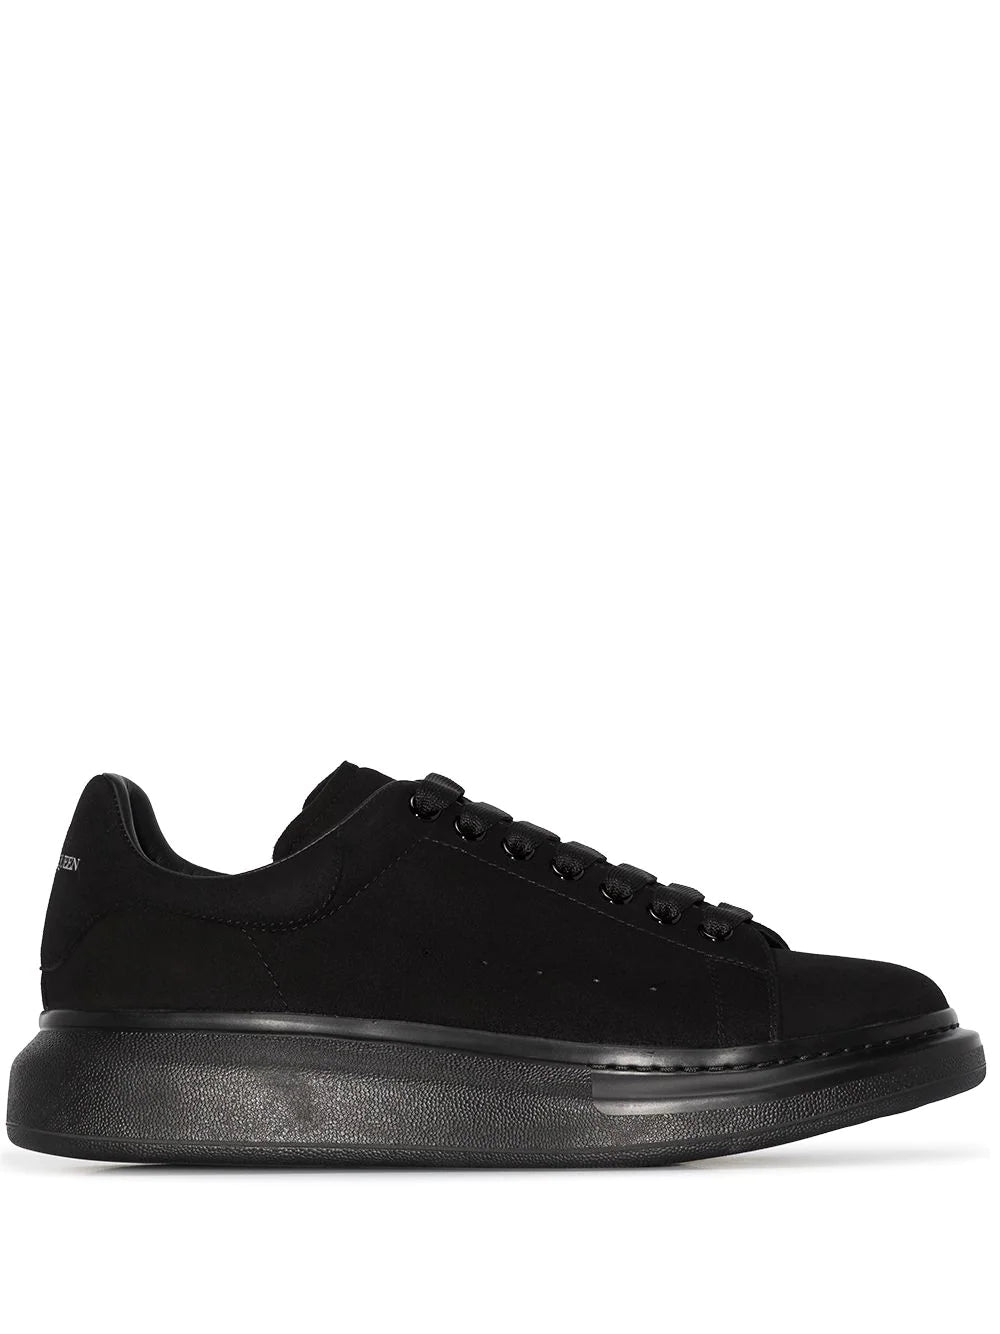 ALEXANDER MCQUEEN Tonal Suede Oversized Sole Sneakers Black/Black - MAISONDEFASHION.COM